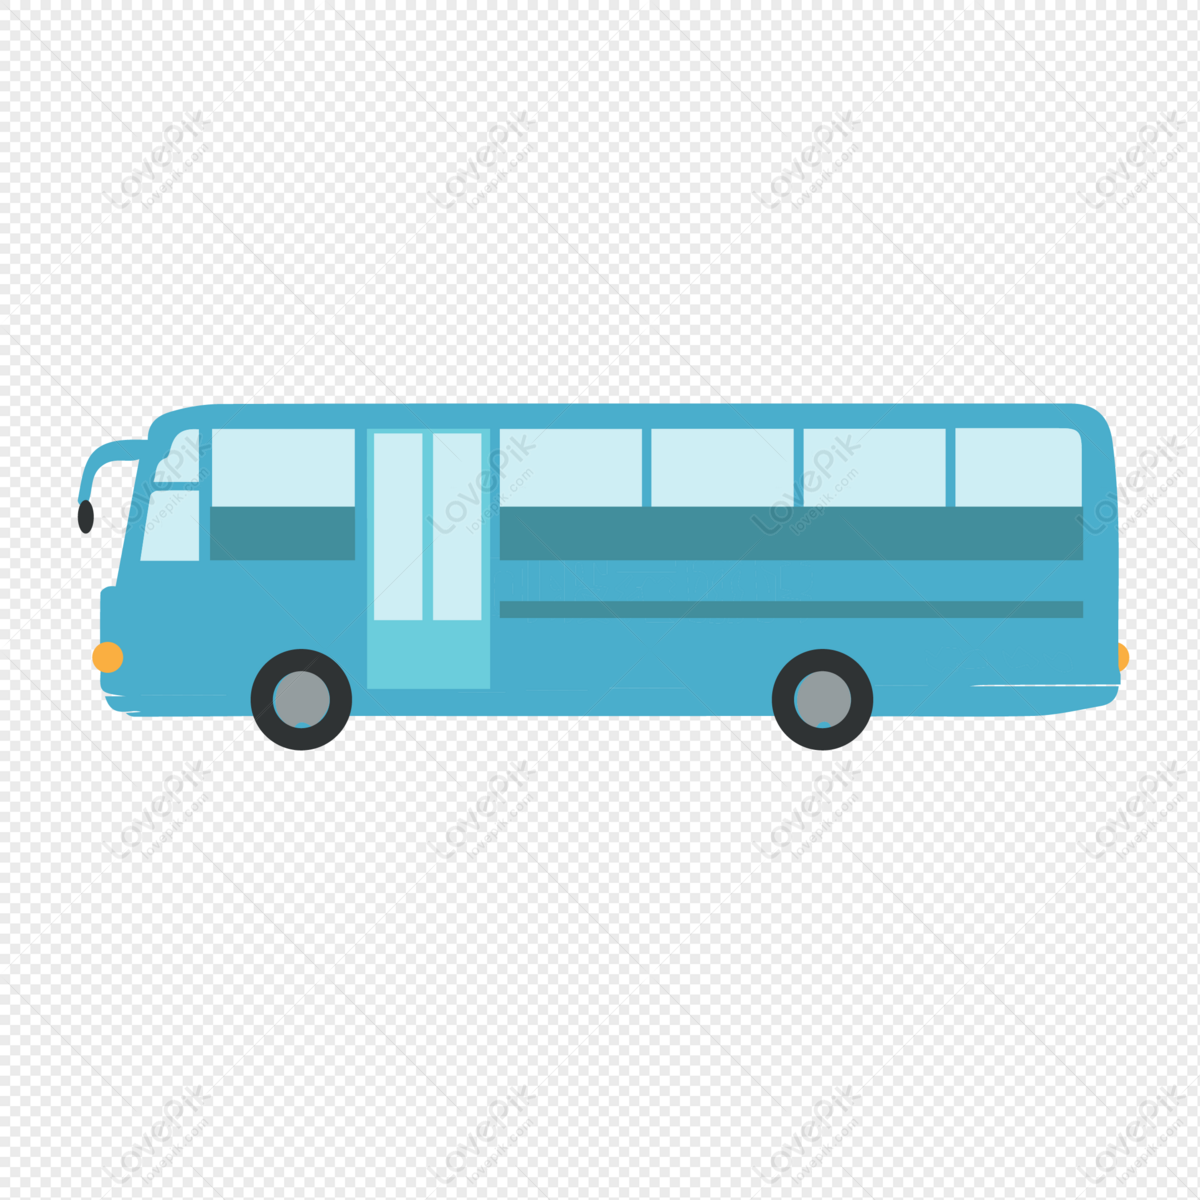 Bus, buses, bus, car png transparent background